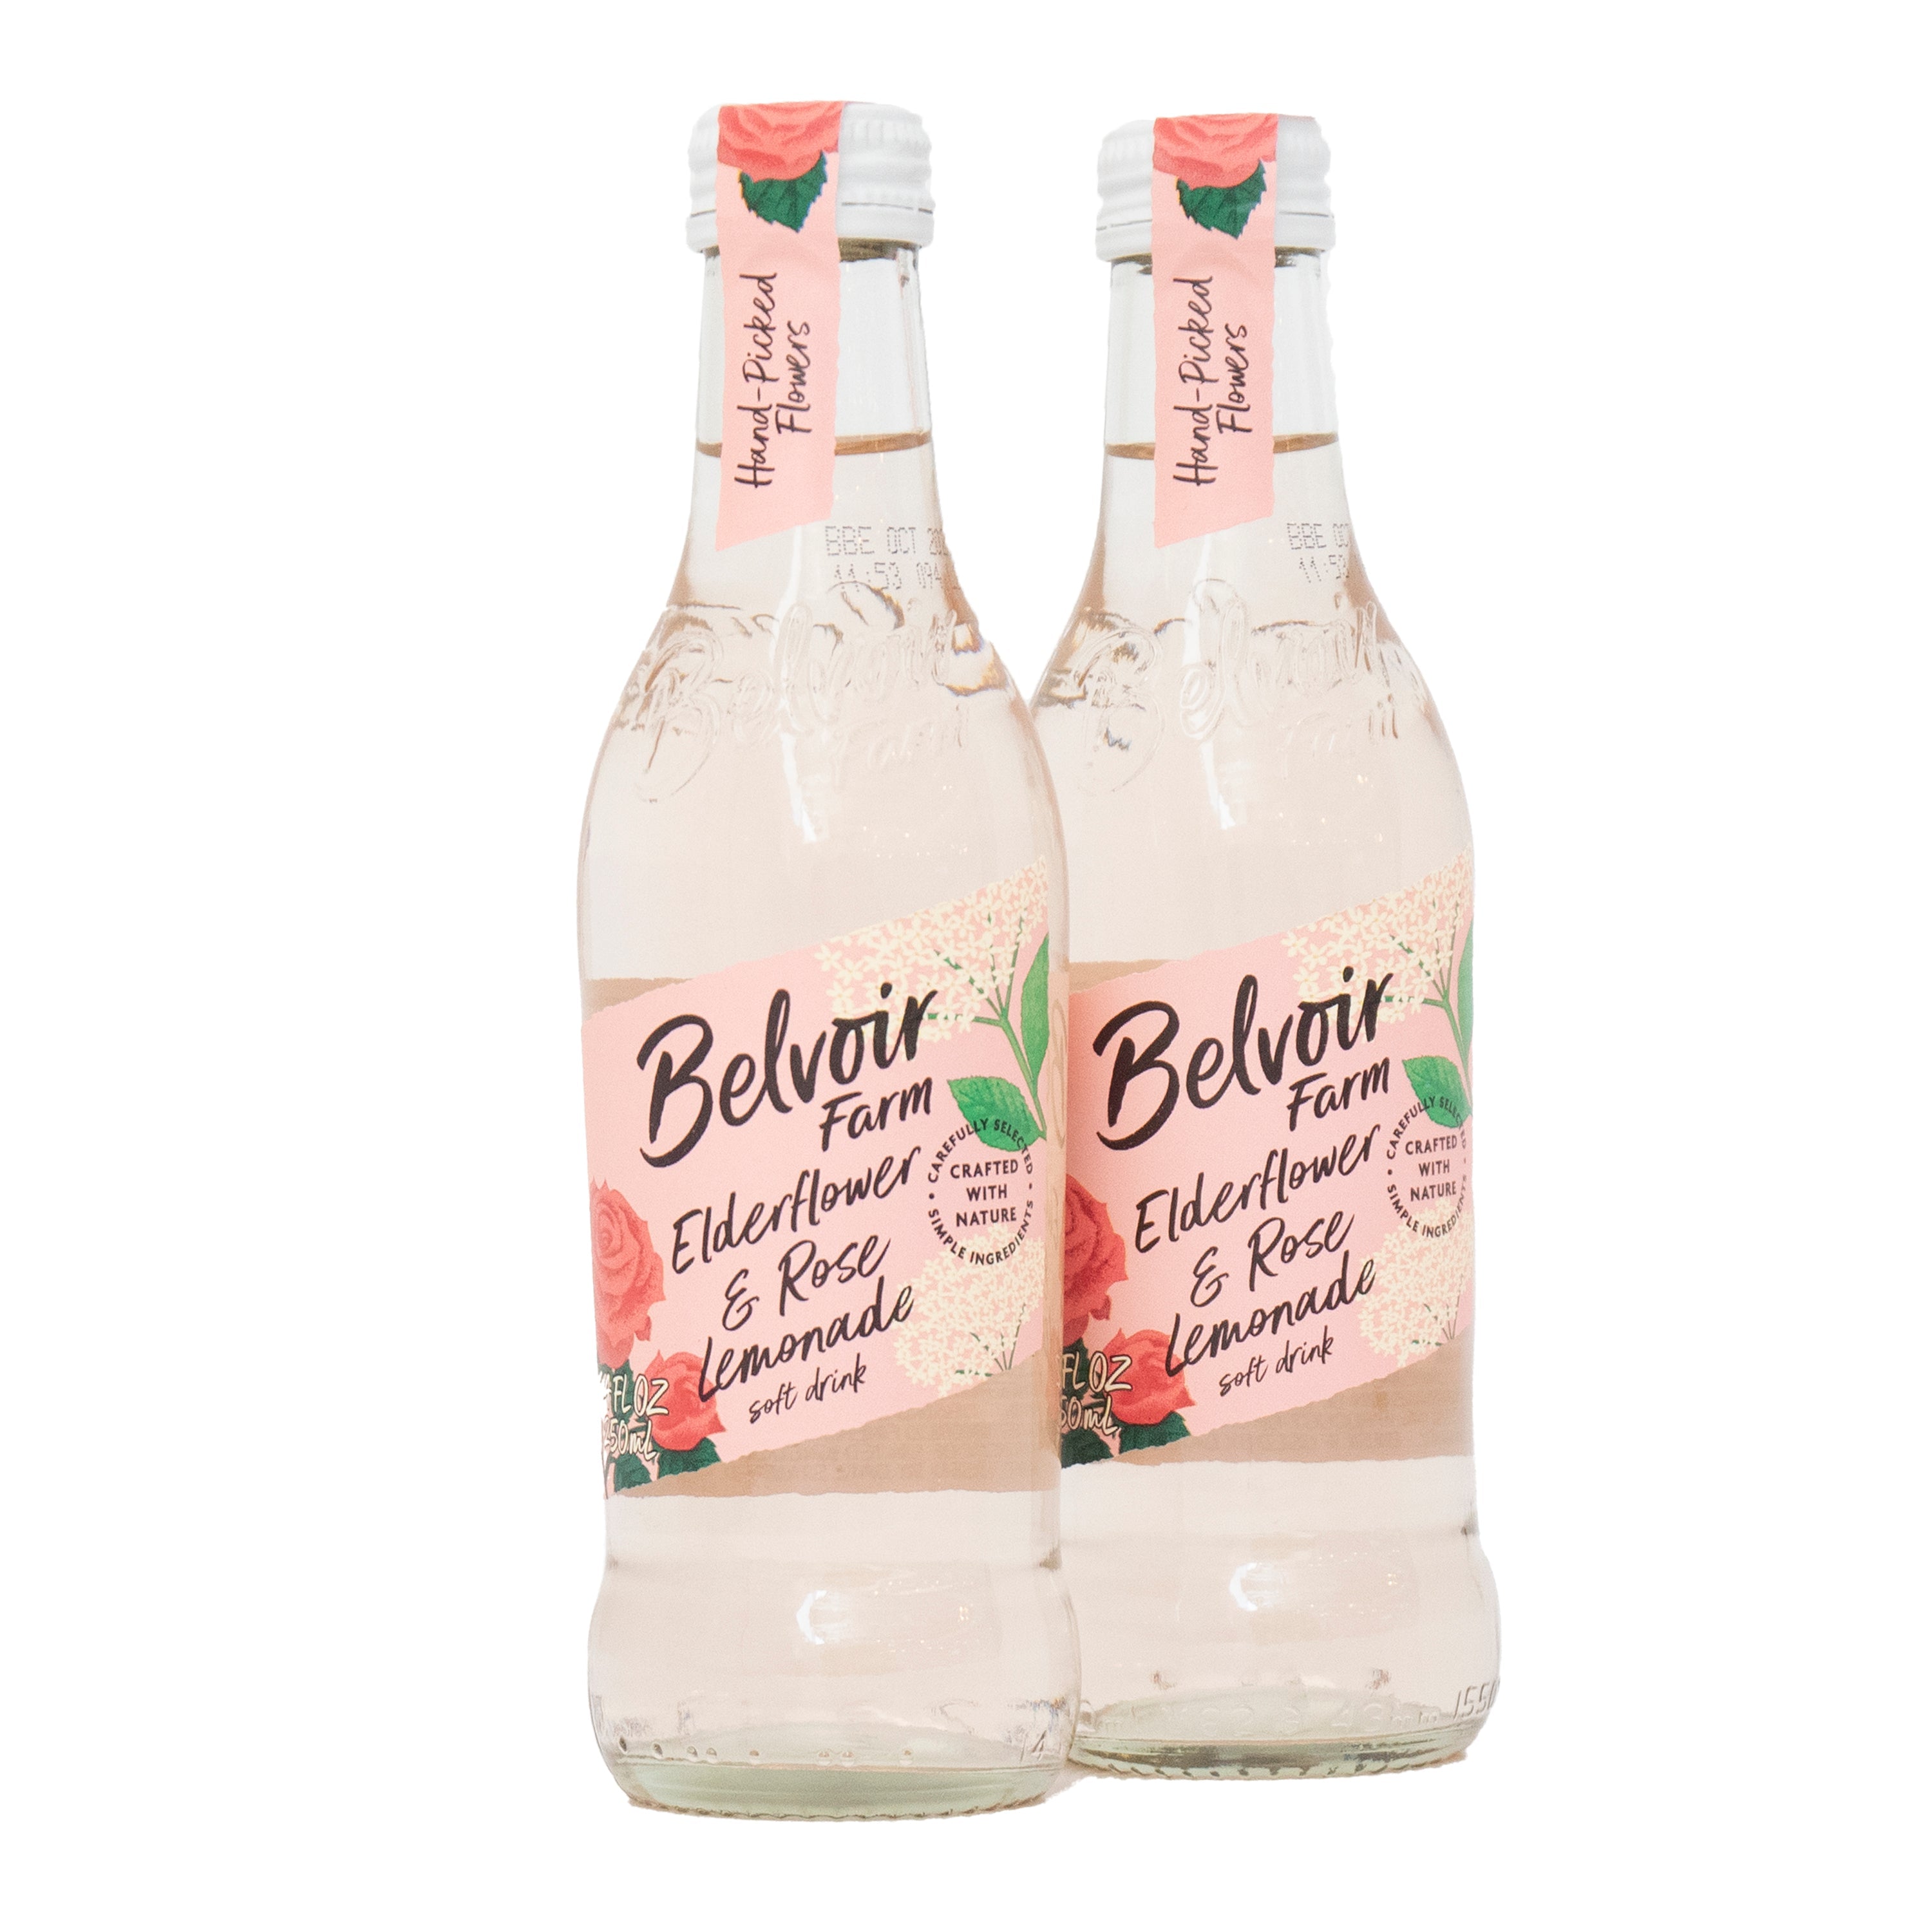 Belvoir Elderflower and Rose Lemonade 8.4oz